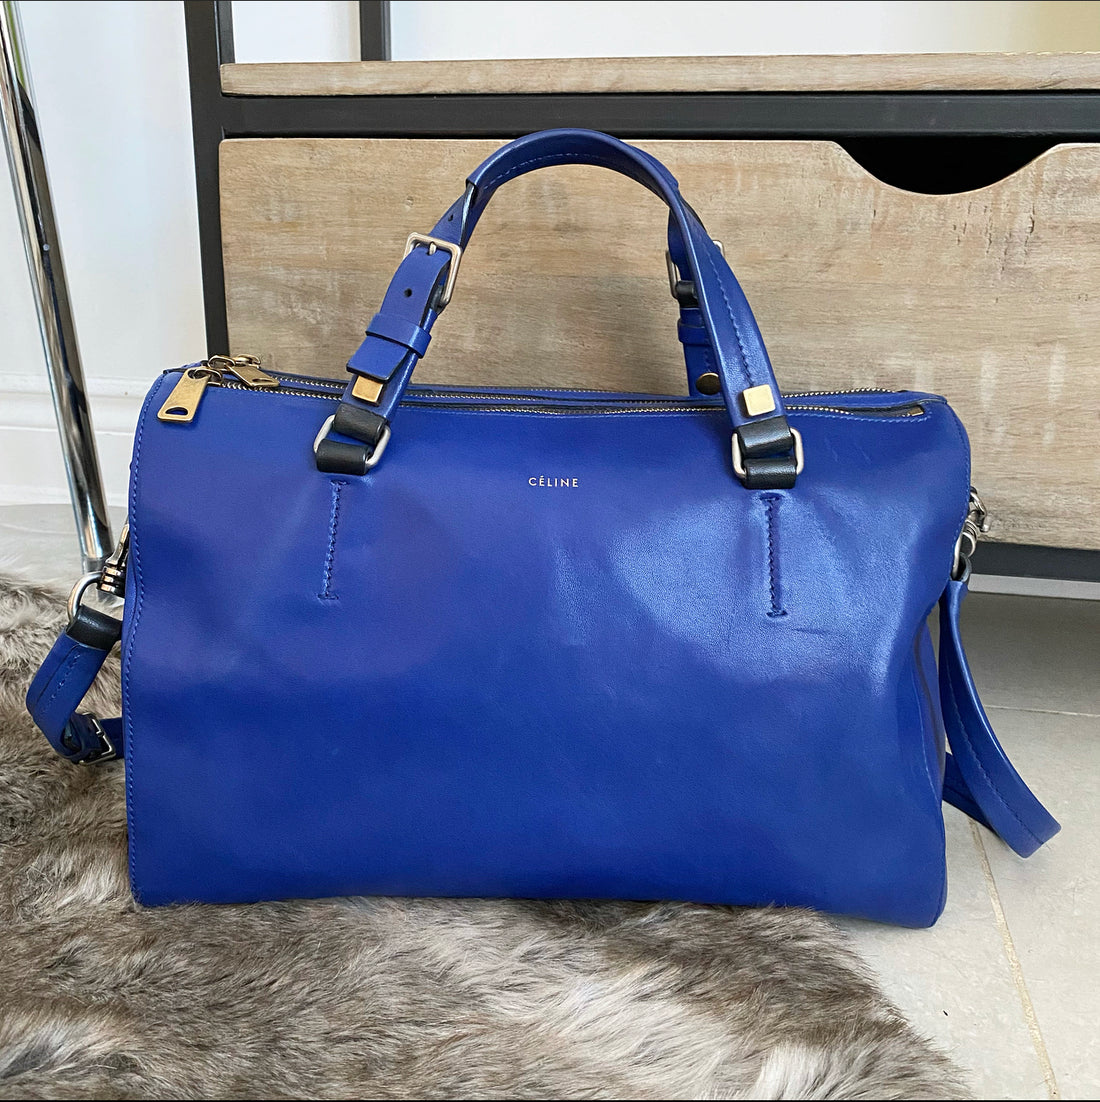 Celine Blue Leather Duffle Two-Way Bag – I MISS YOU VINTAGE